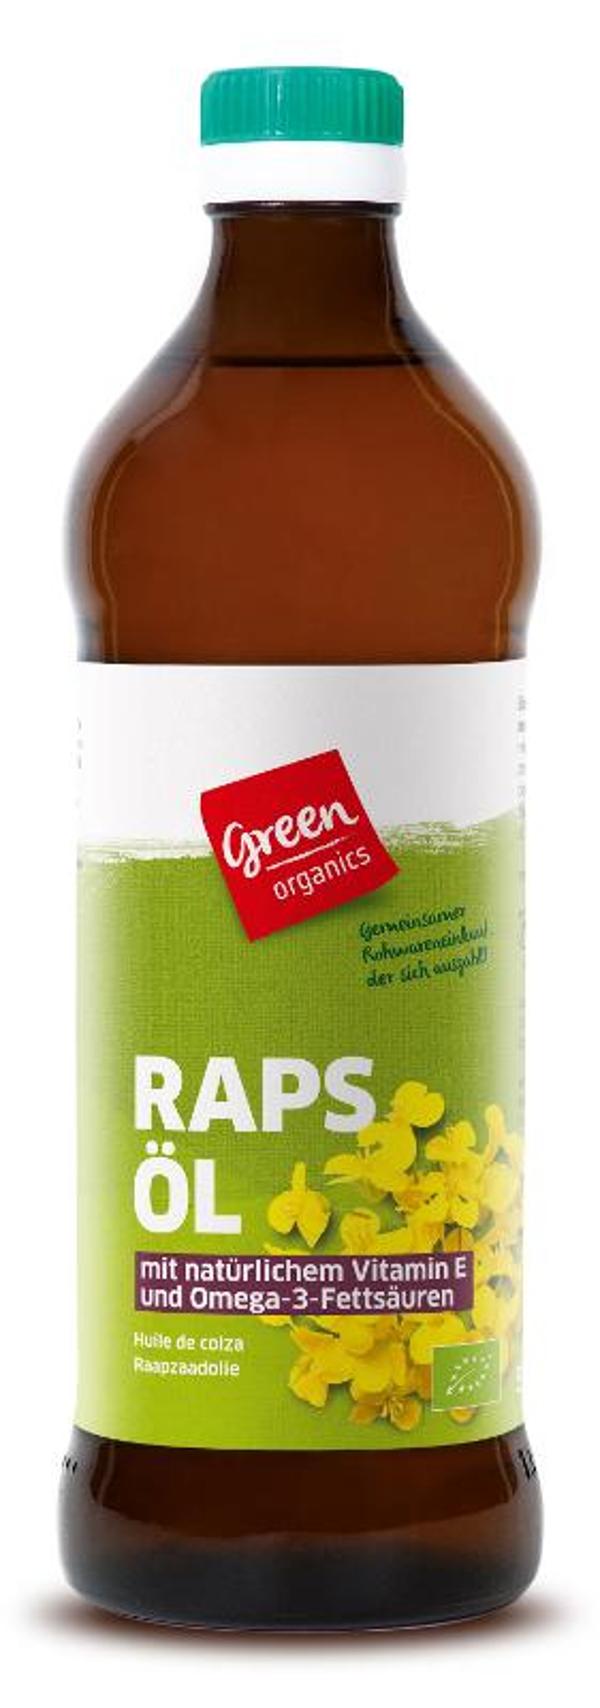 Produktfoto zu green Rapskernöl kaltgepresst